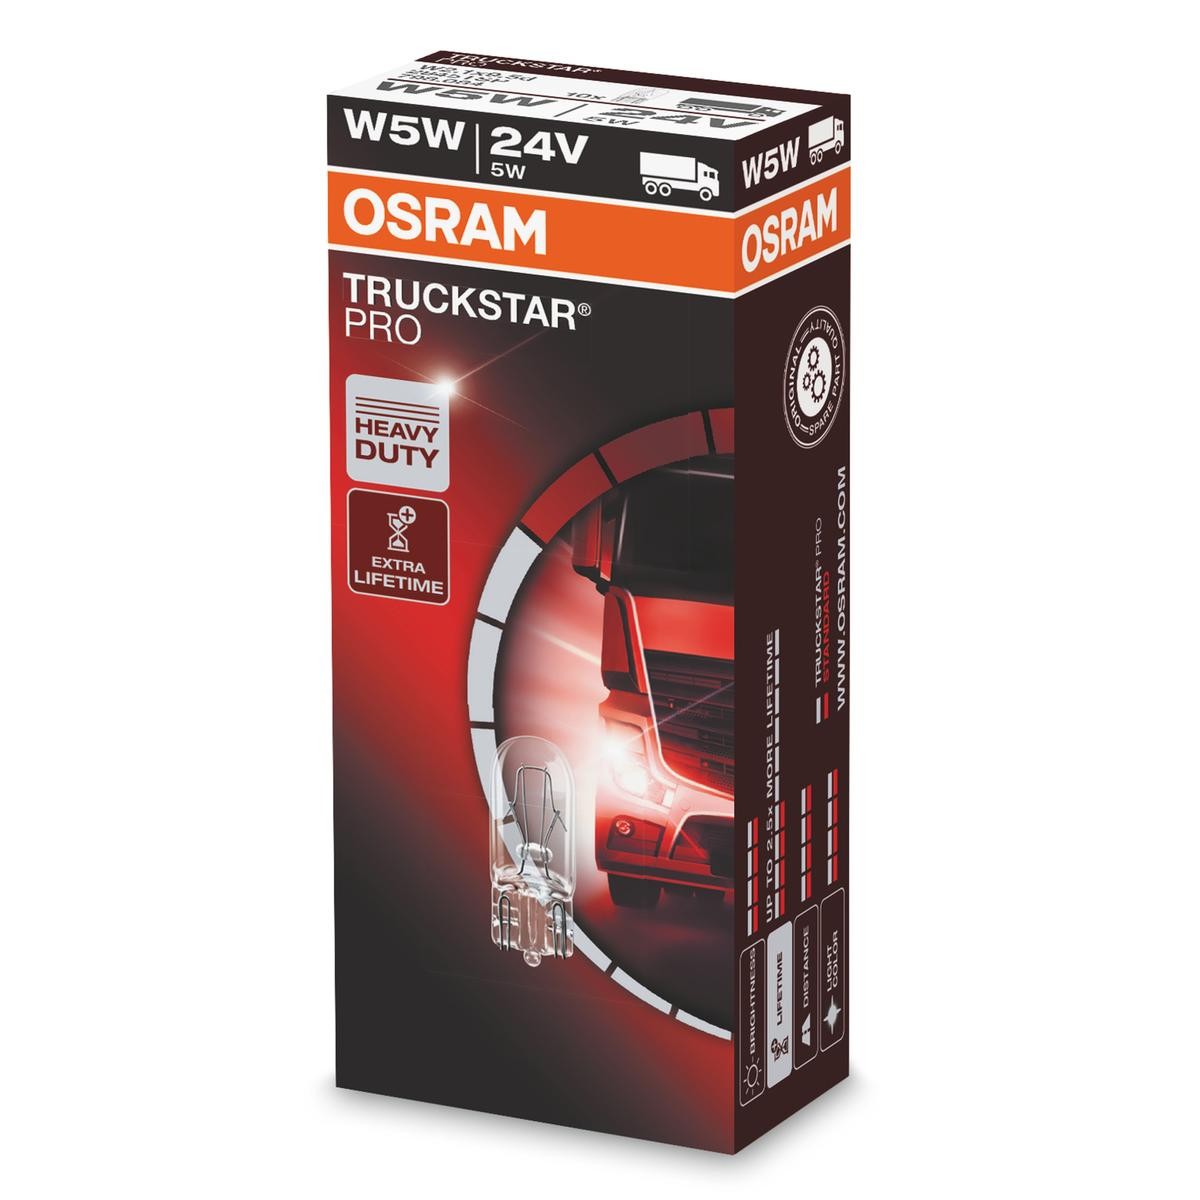 W5W OSRAM TRUCKSTAR PRO 24V 5W, W5W Bulb, indicator 2845TSP buy